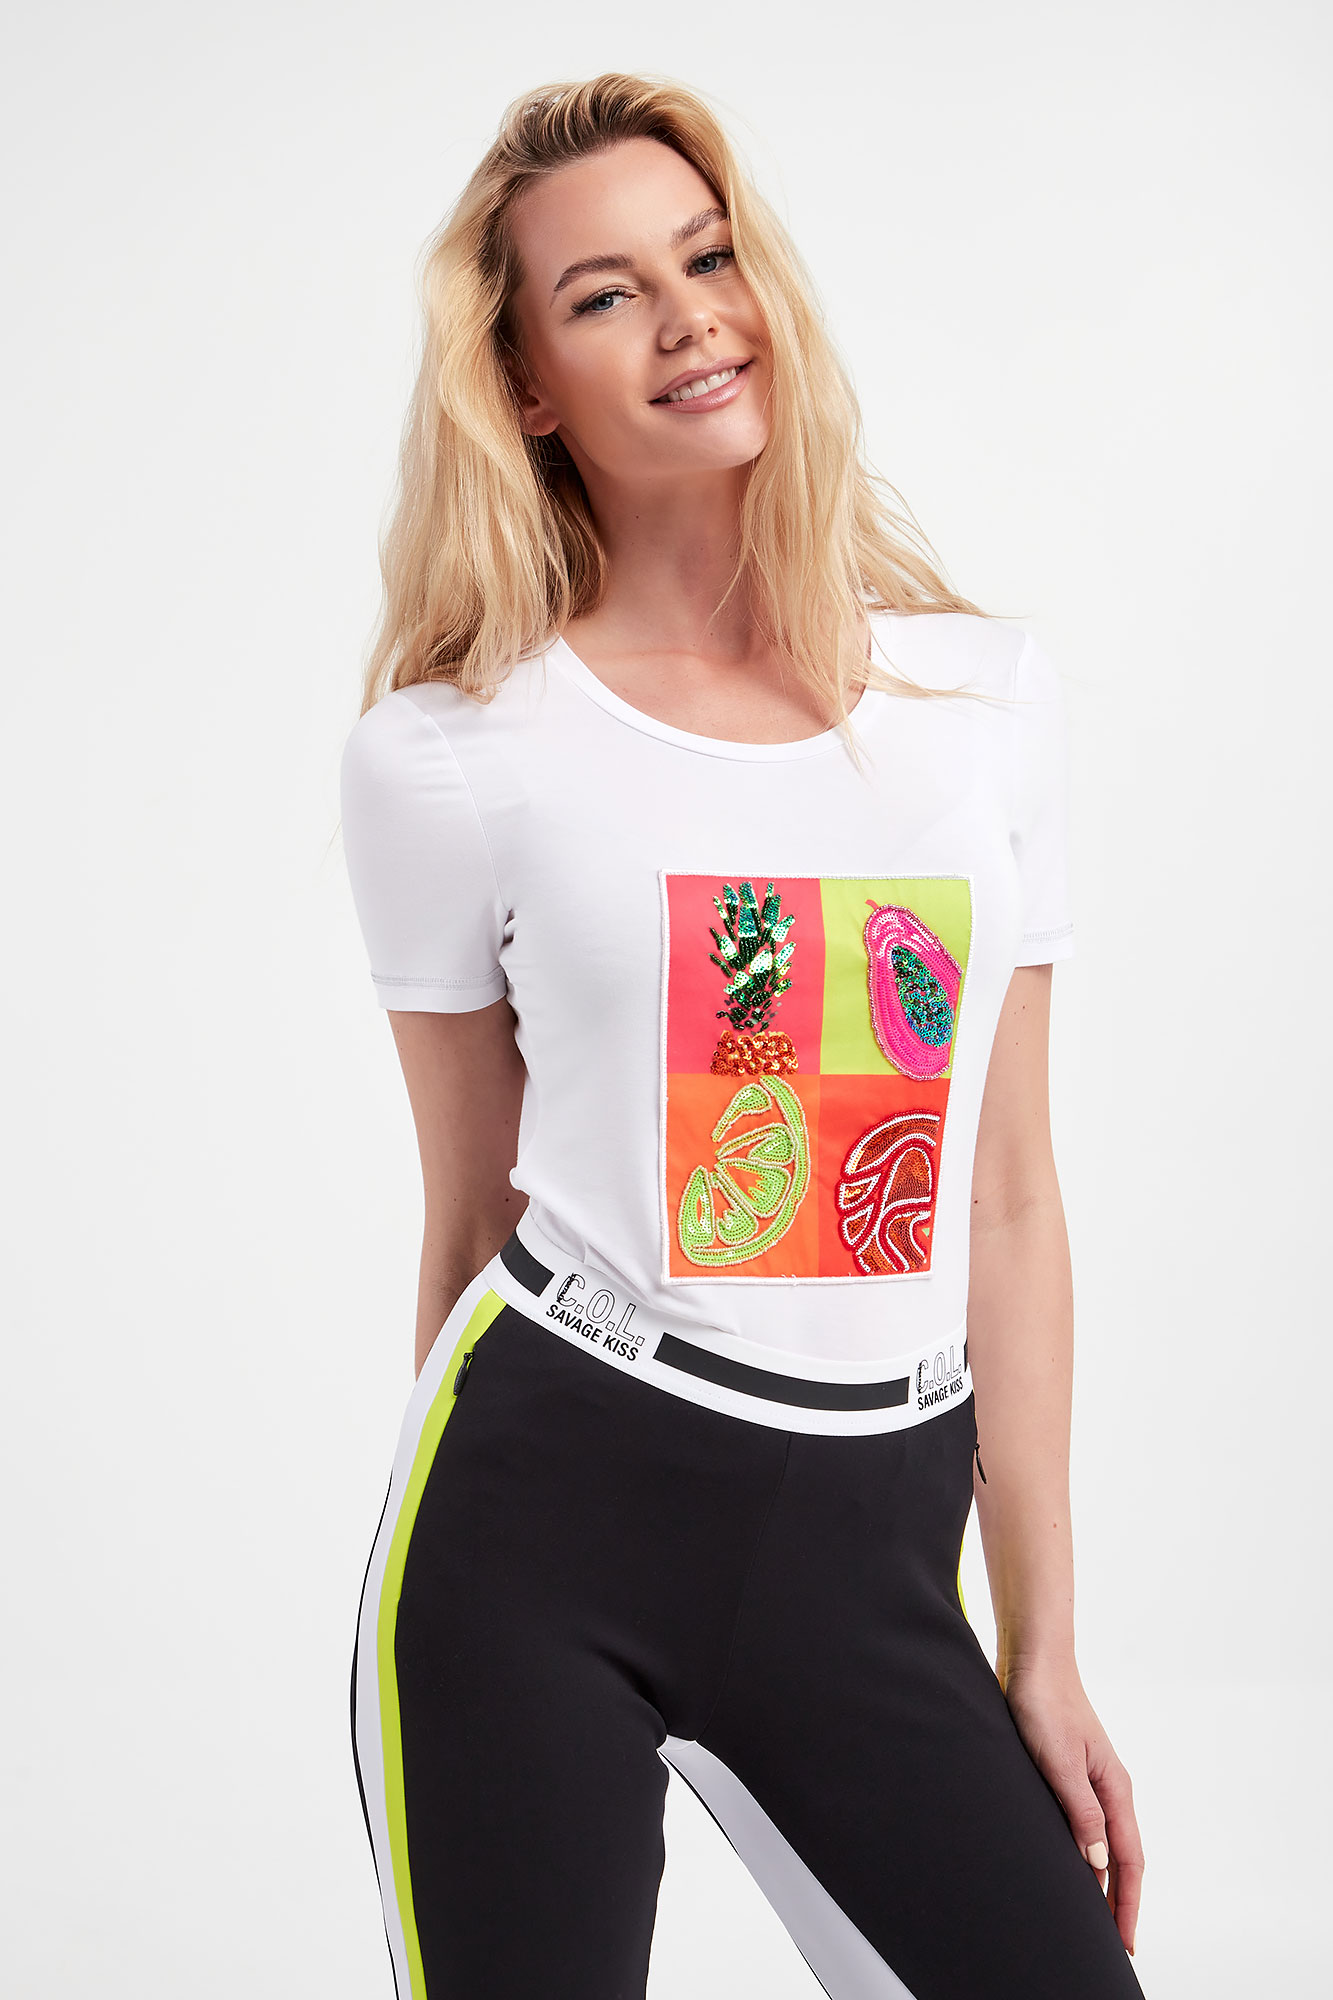 T-shirt Leesha SPORTALM rozmiar 44 (roz. polski 40) – 64668-181